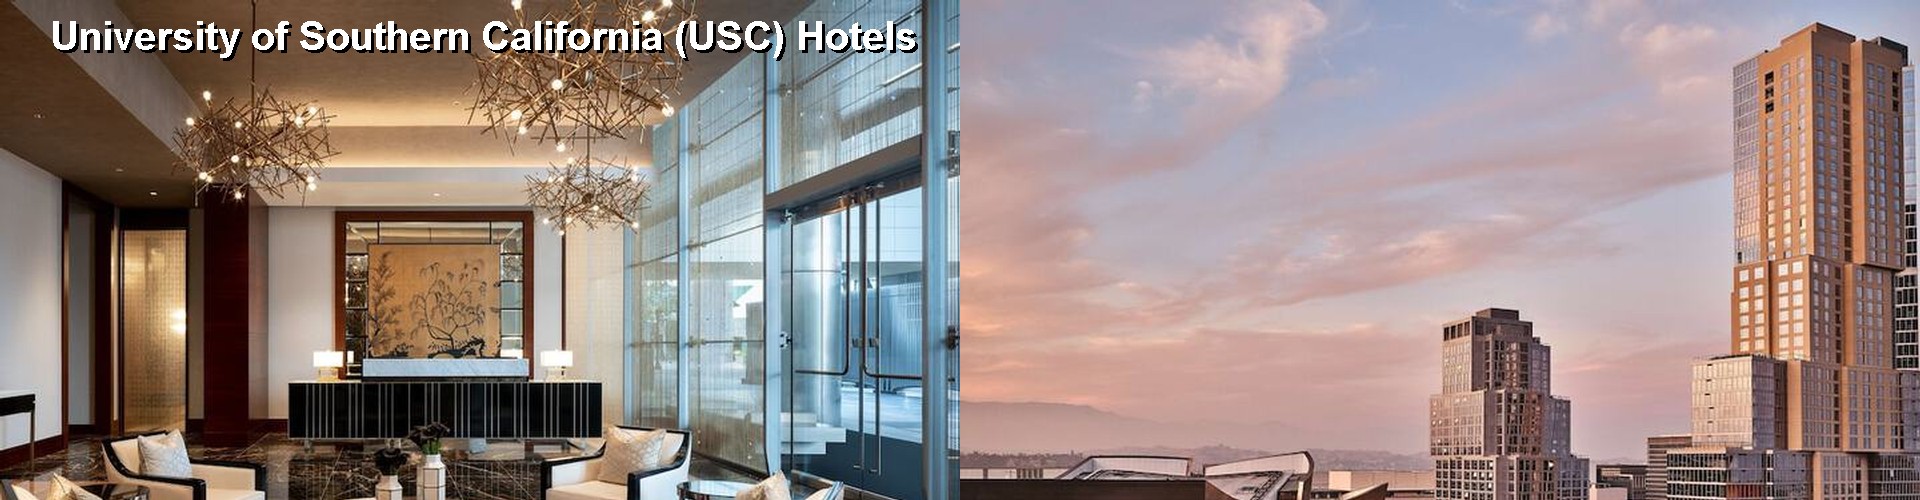 5 Best Hotels near University of Southern California (USC)